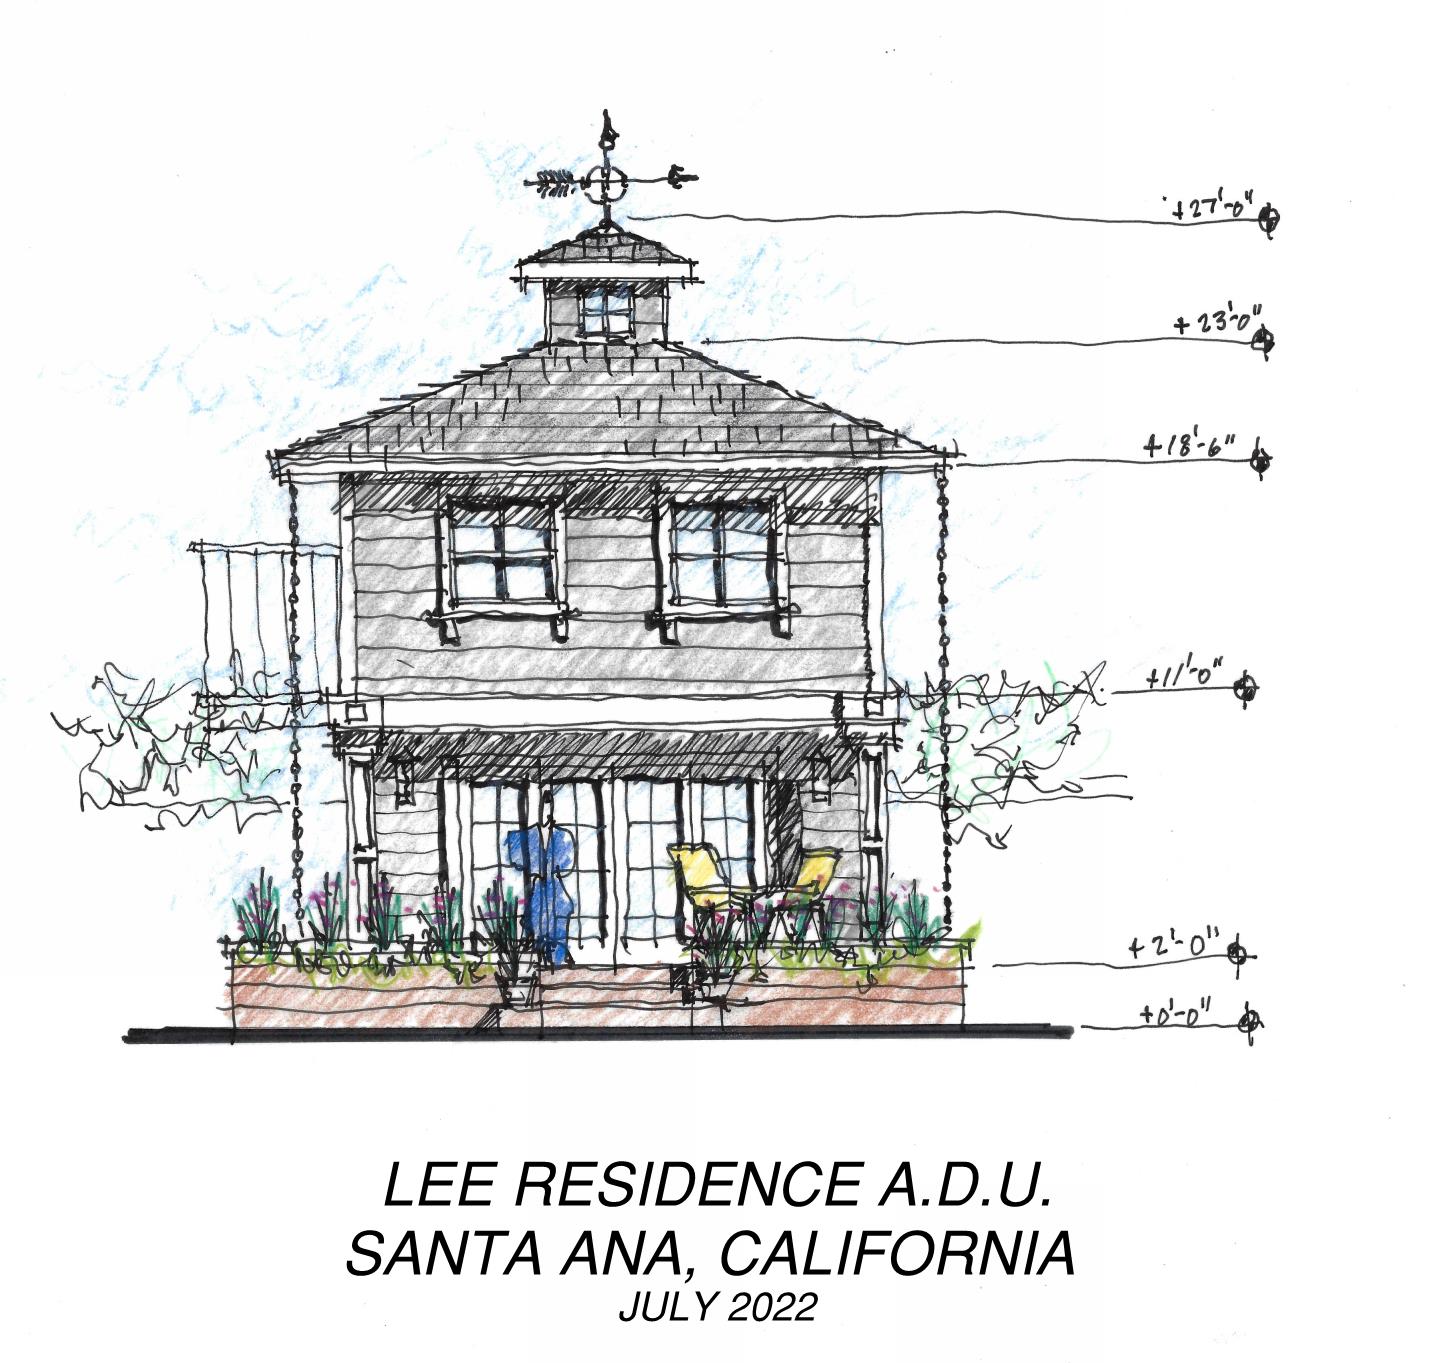 LEE RESIDENCE A.D.U. – SANTA ANA, CALIFORNIA